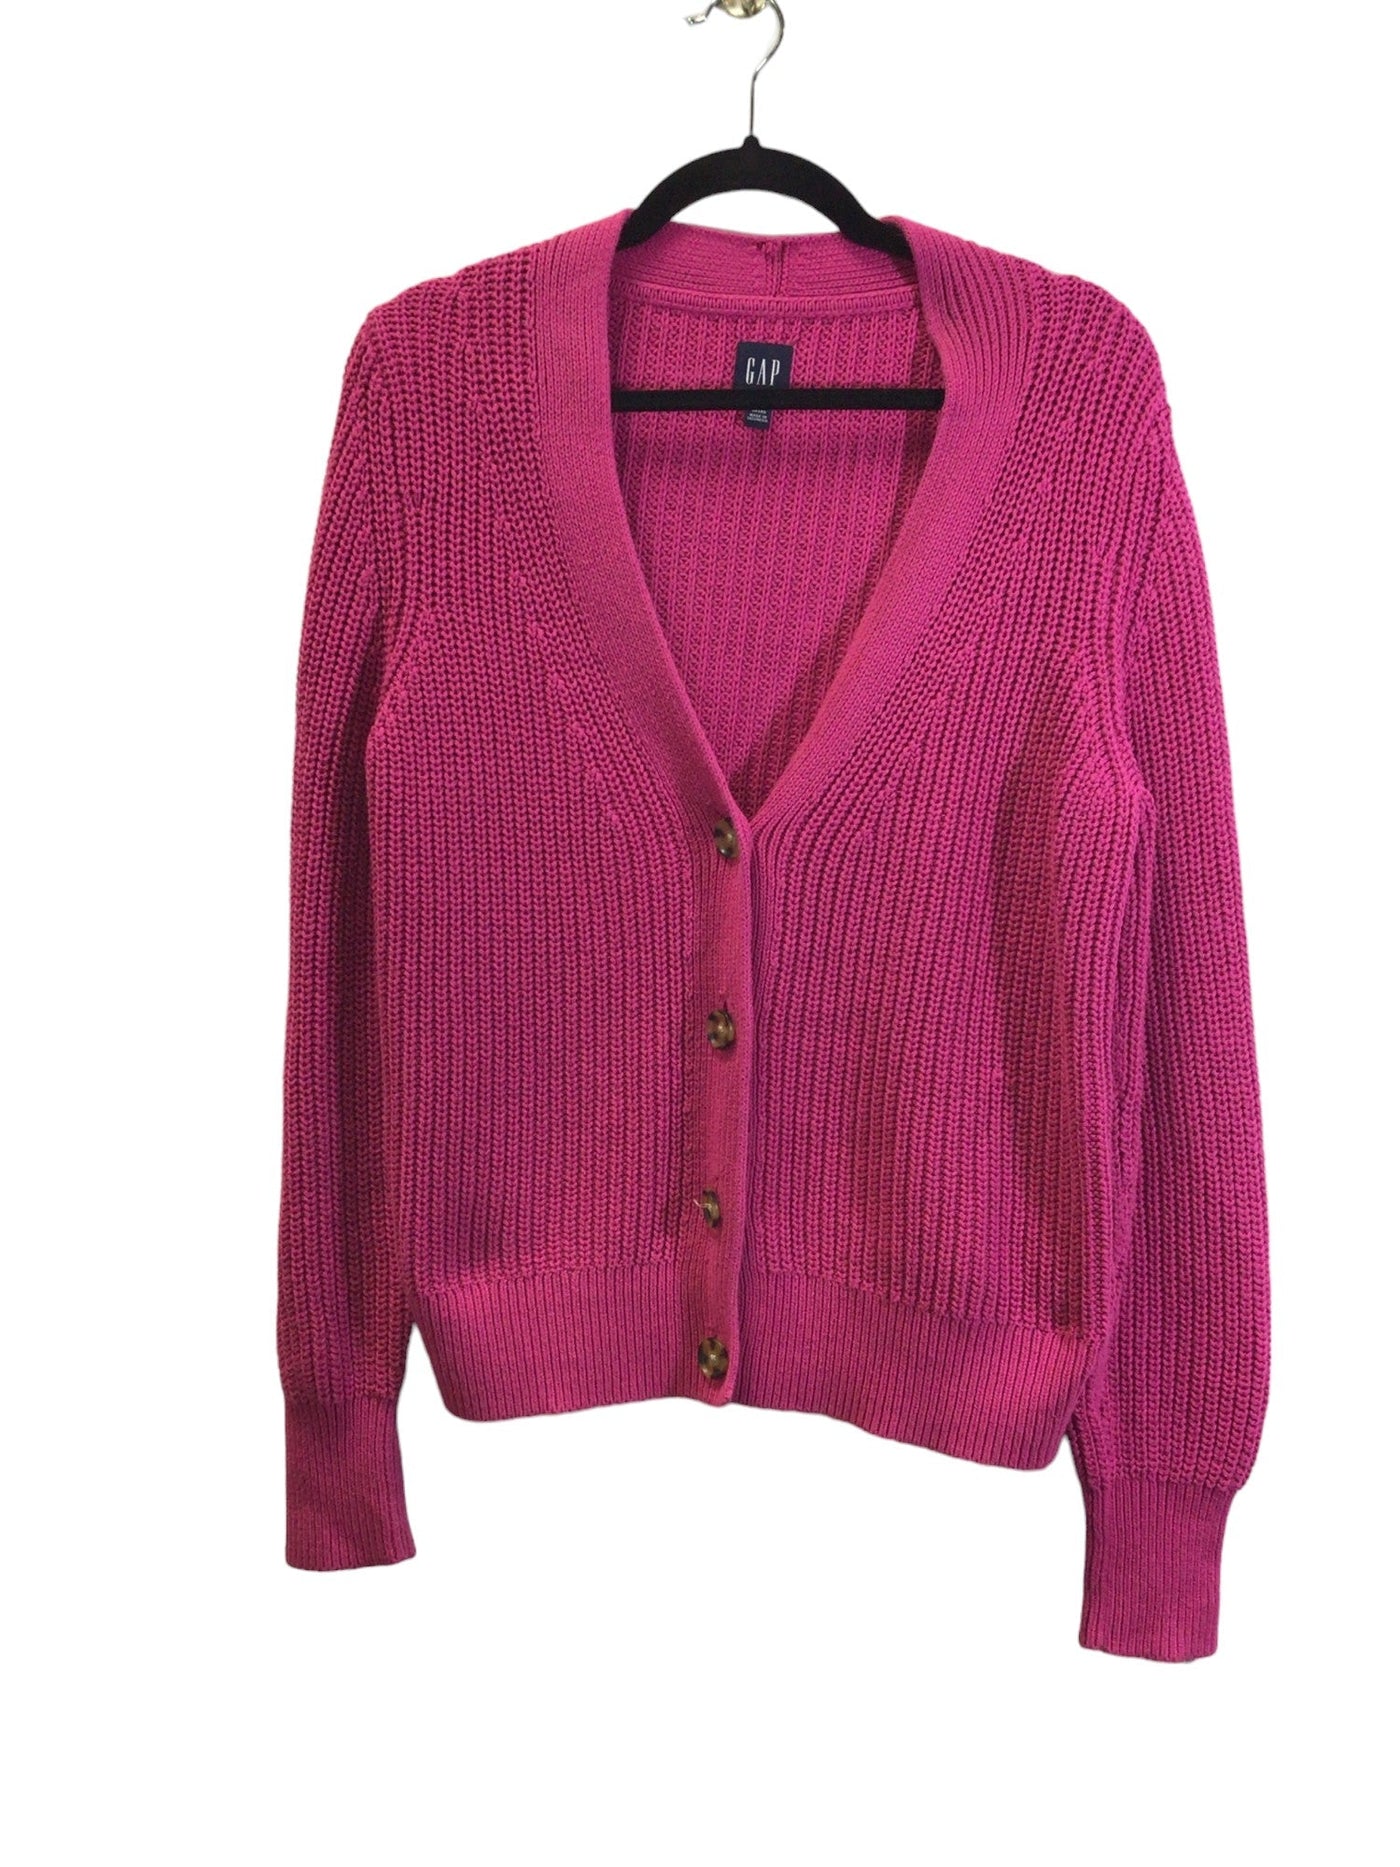 GAP Women Cardigans Regular fit in Pink - Size S | 11.25 $ KOOP